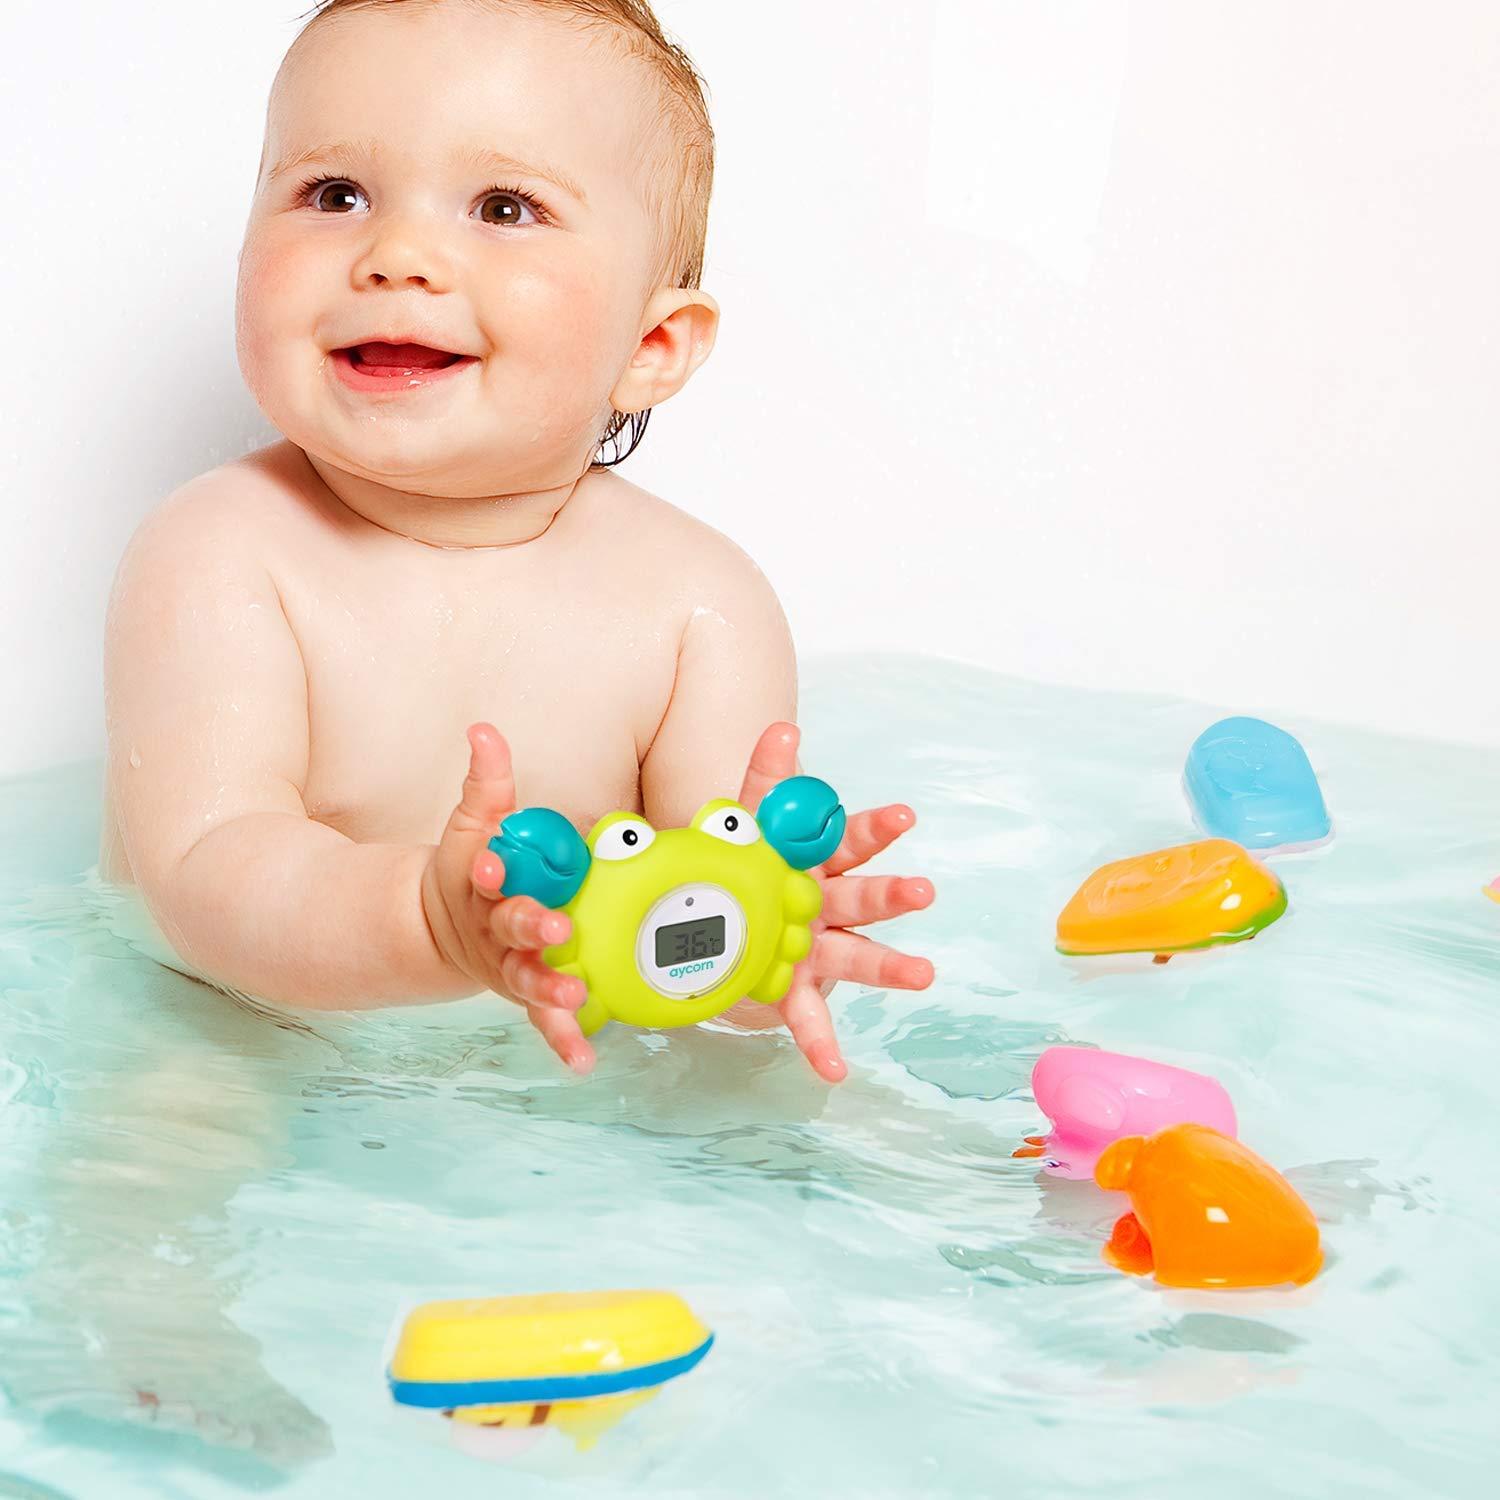 Carevas Baby Bath Thermometer Toy IP65 Waterproof Astronaut Water